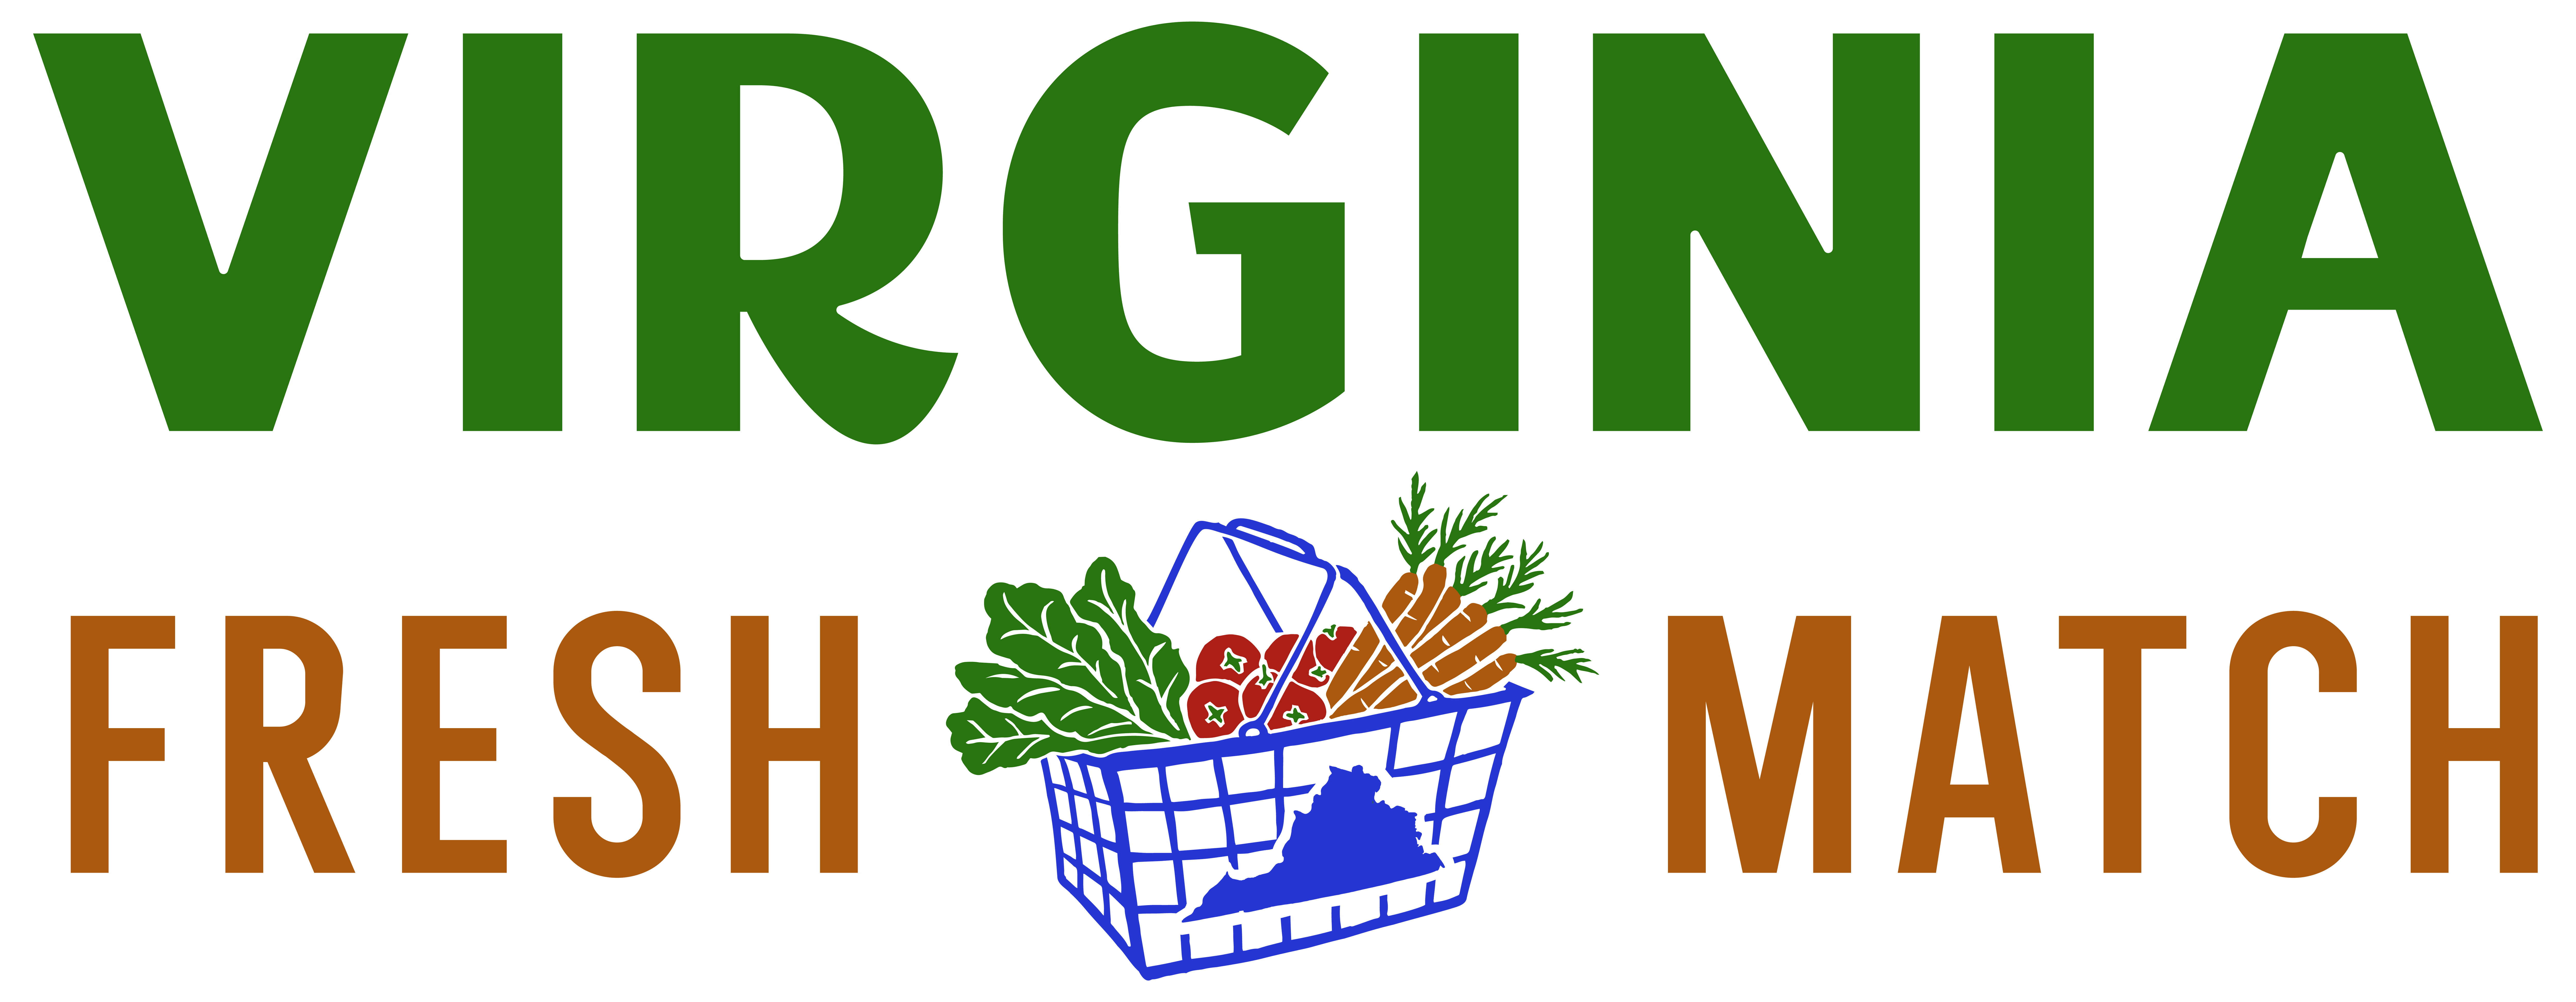 Virginia Fresh Match logo